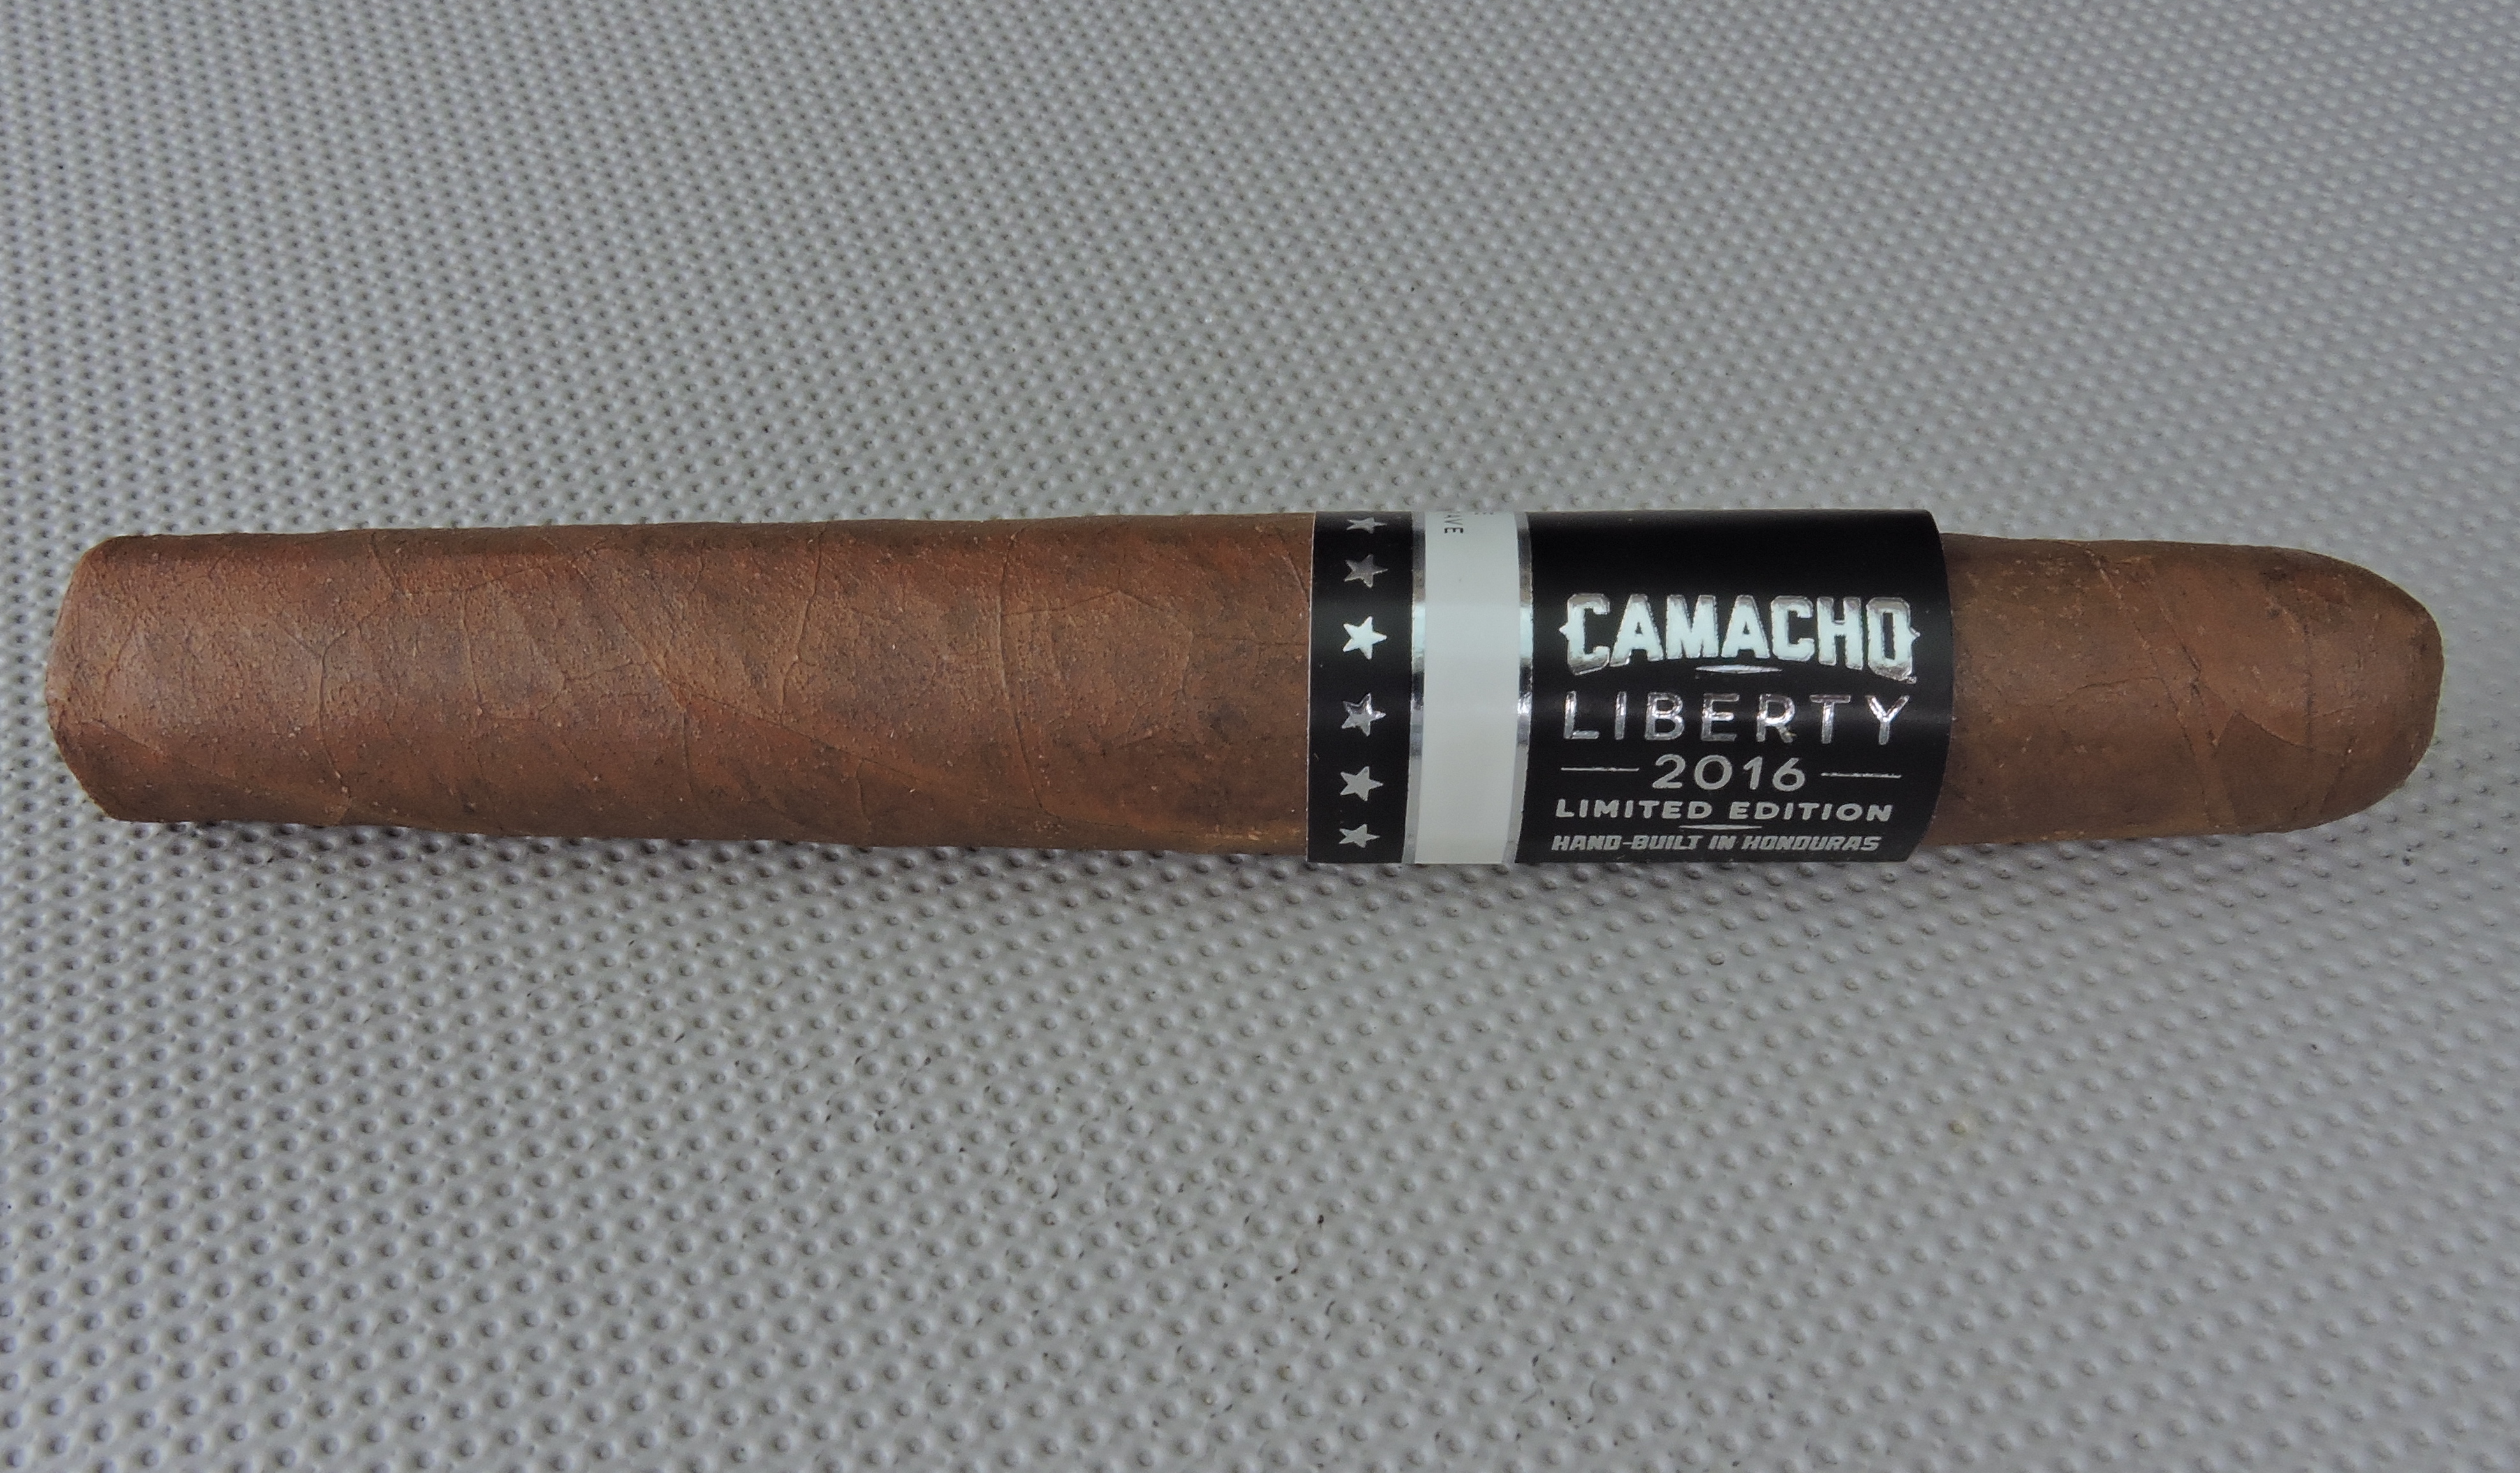 Camacho Liberty 2016